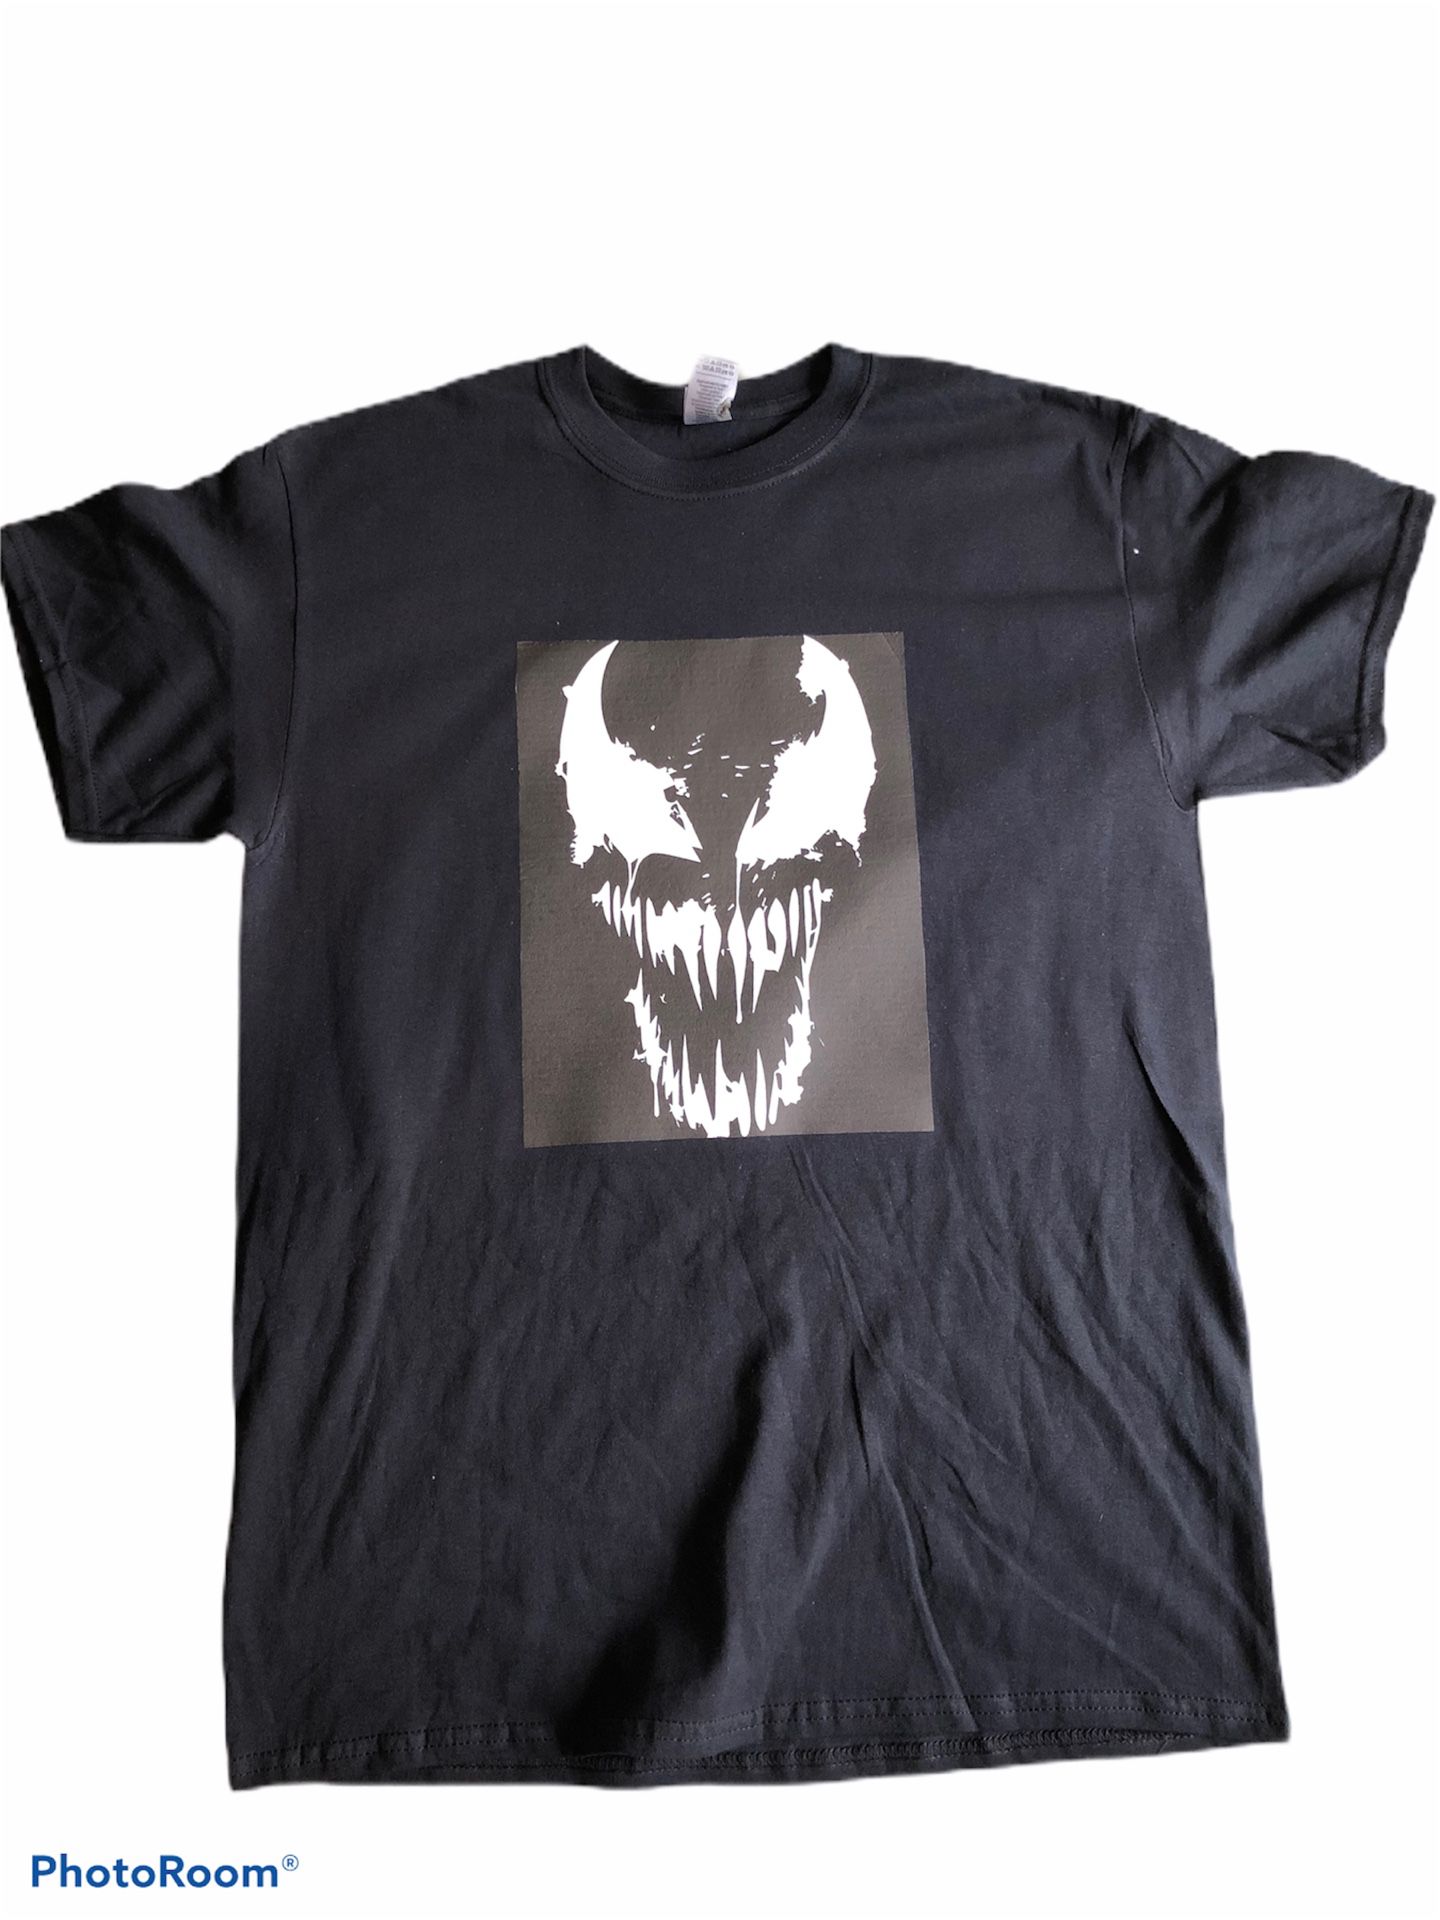 Venom t shirt all sizes